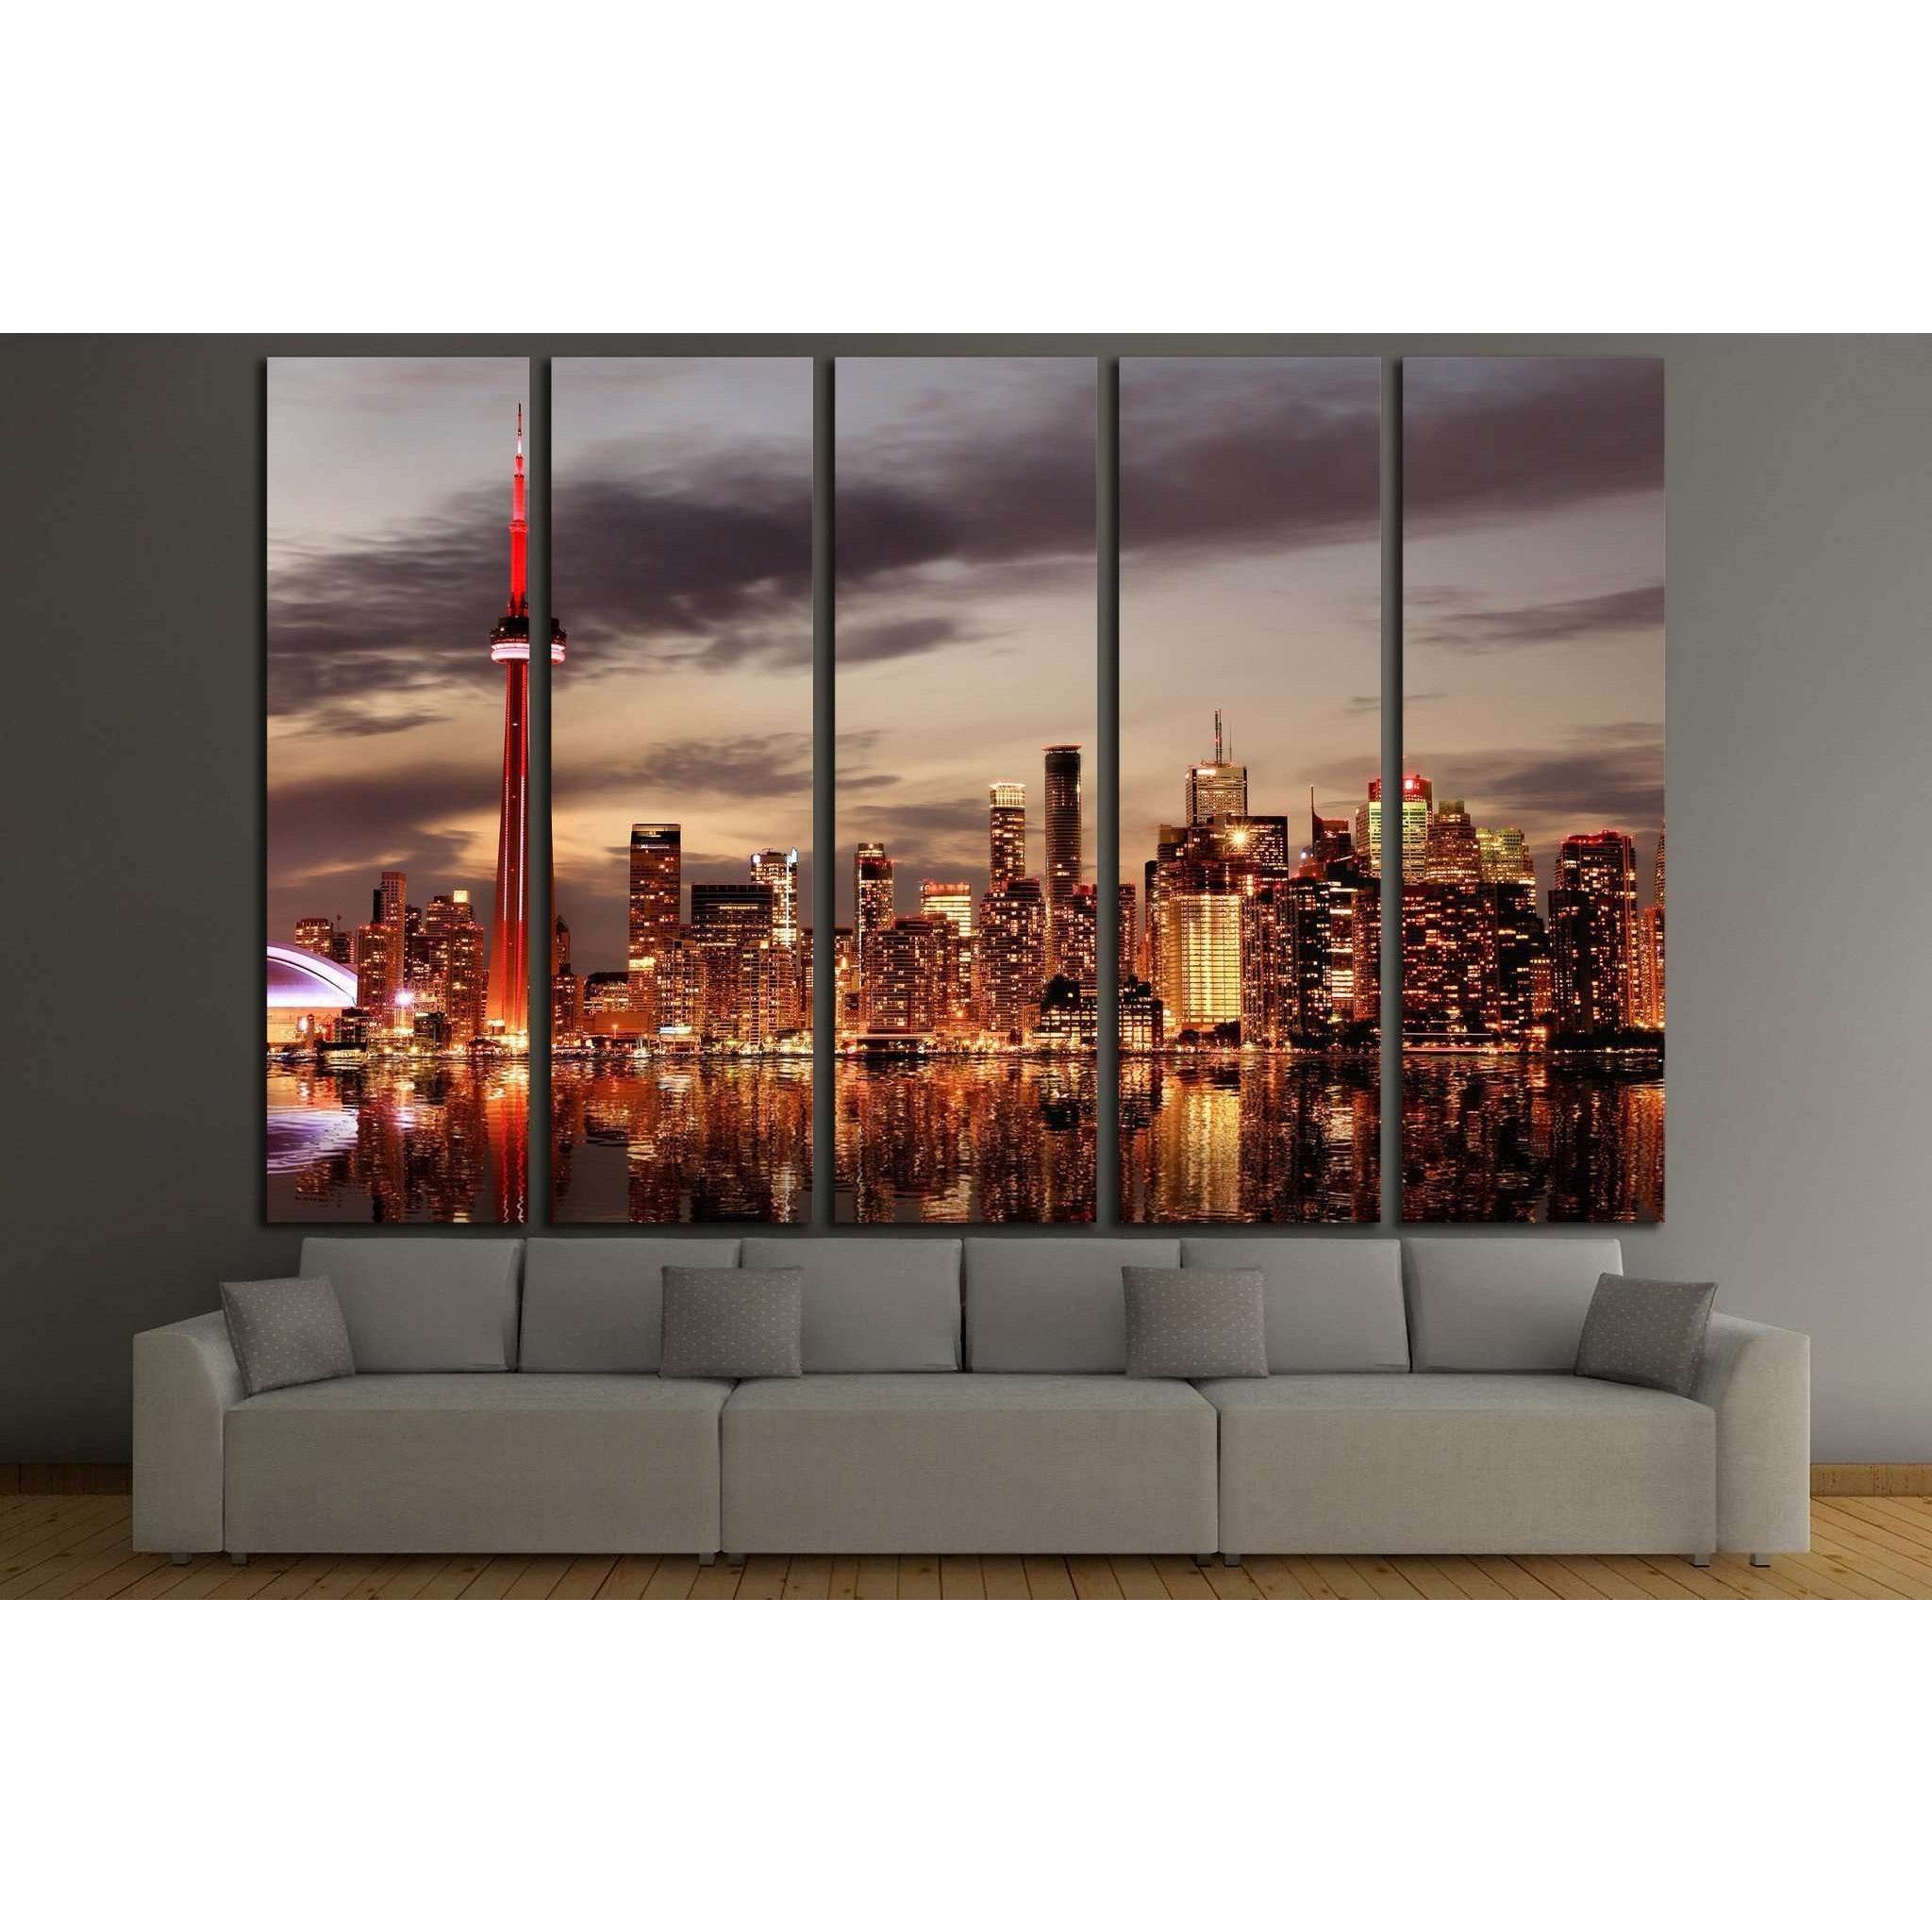 Toronto Skyline at sunset, Ontario, Canada №2069 Ready to Hang Canvas Print